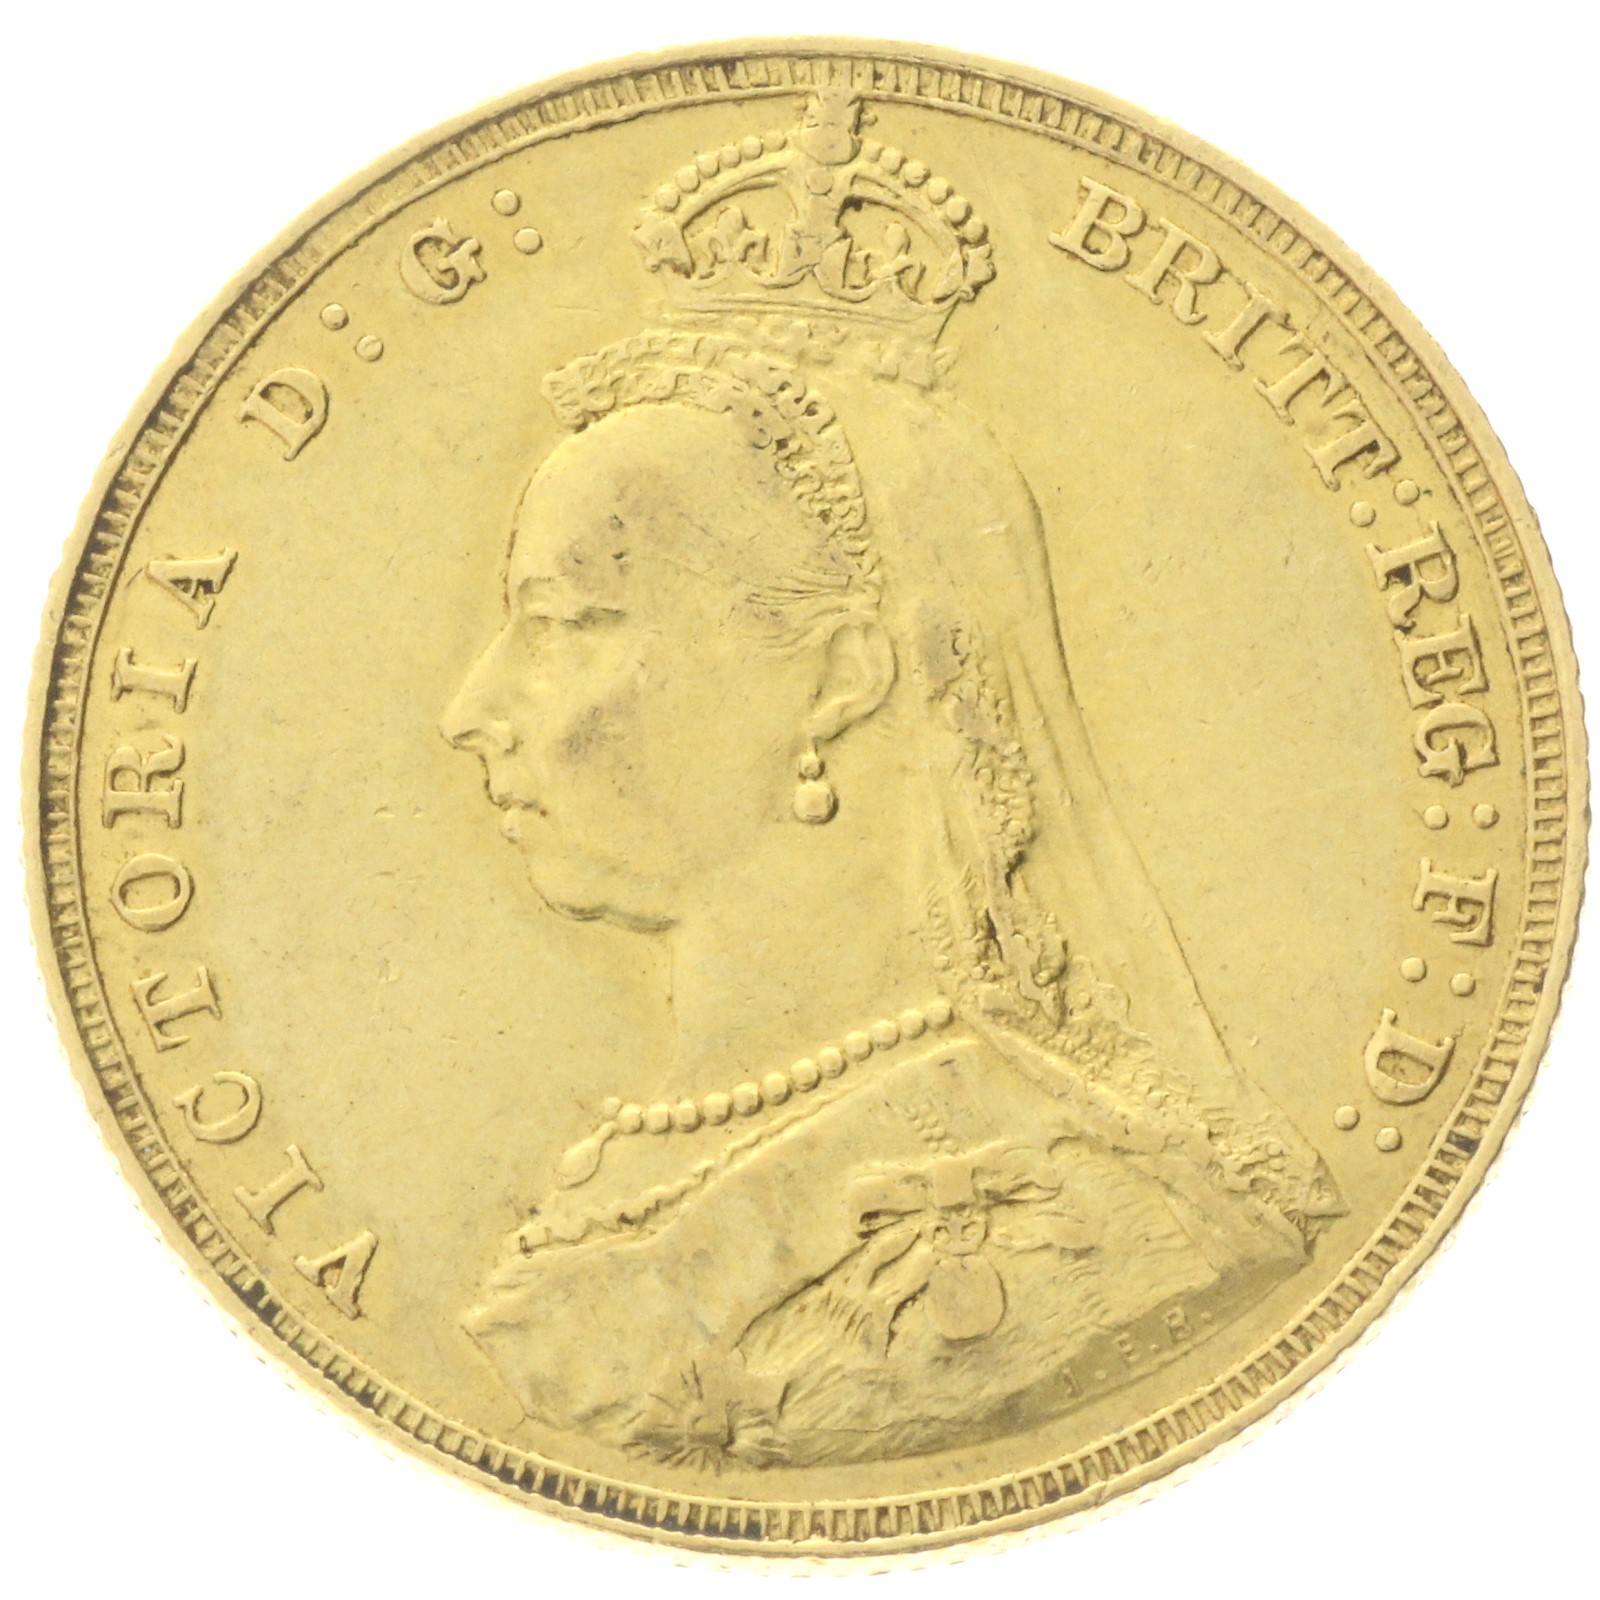 United Kingdom - 1 Sovereign - 1887 - Victoria